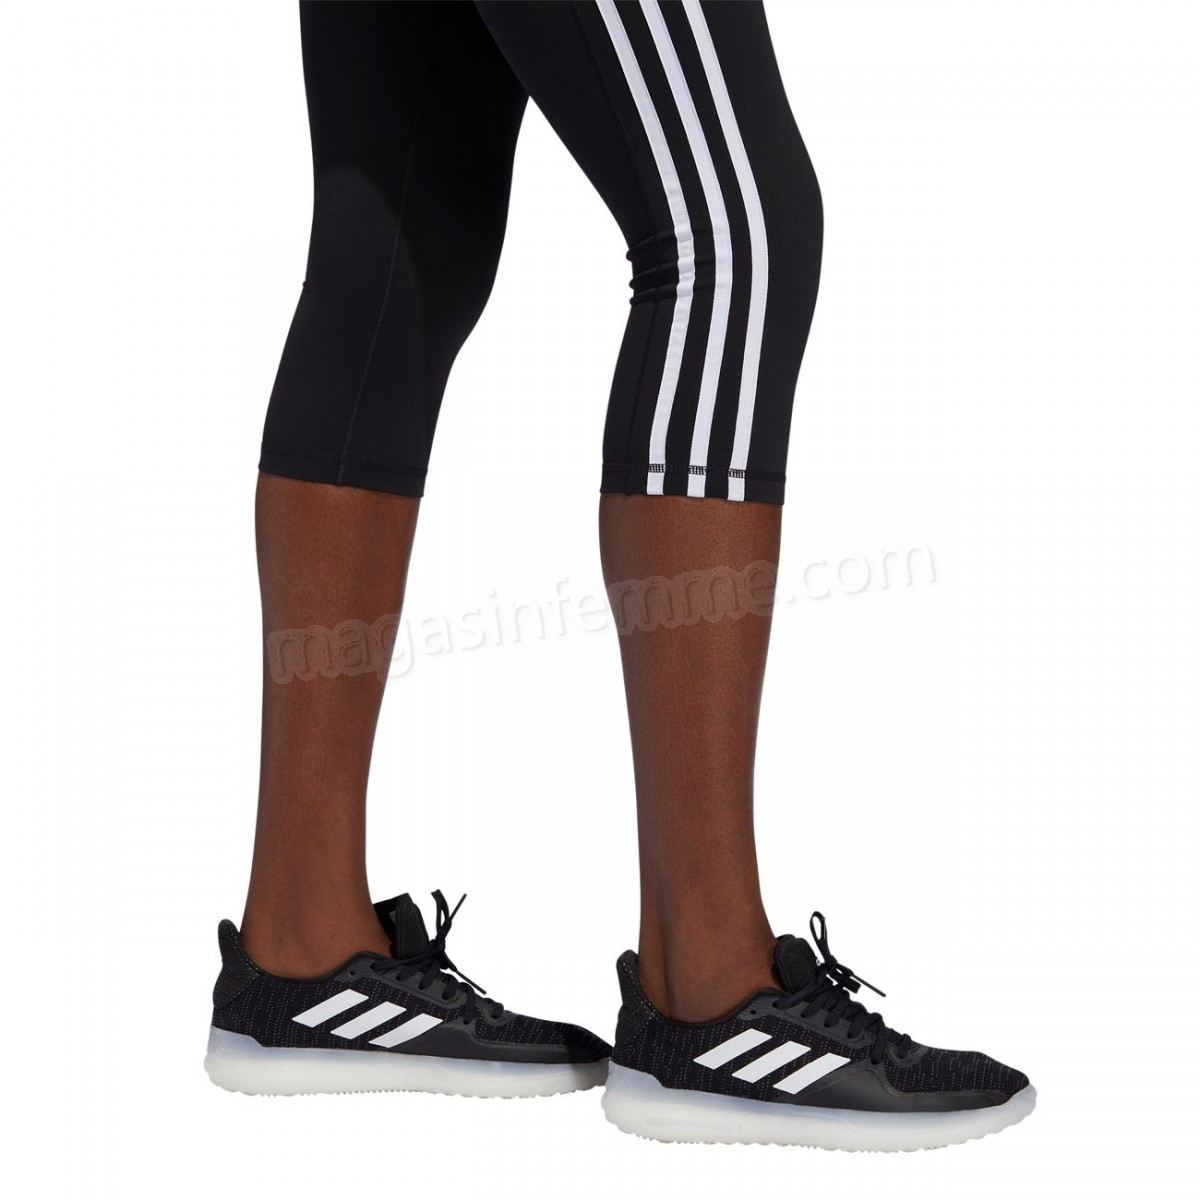 Adidas-Fitness femme ADIDAS Collant femme 3/4 adidas Believe This 3-Stripes en solde - -9